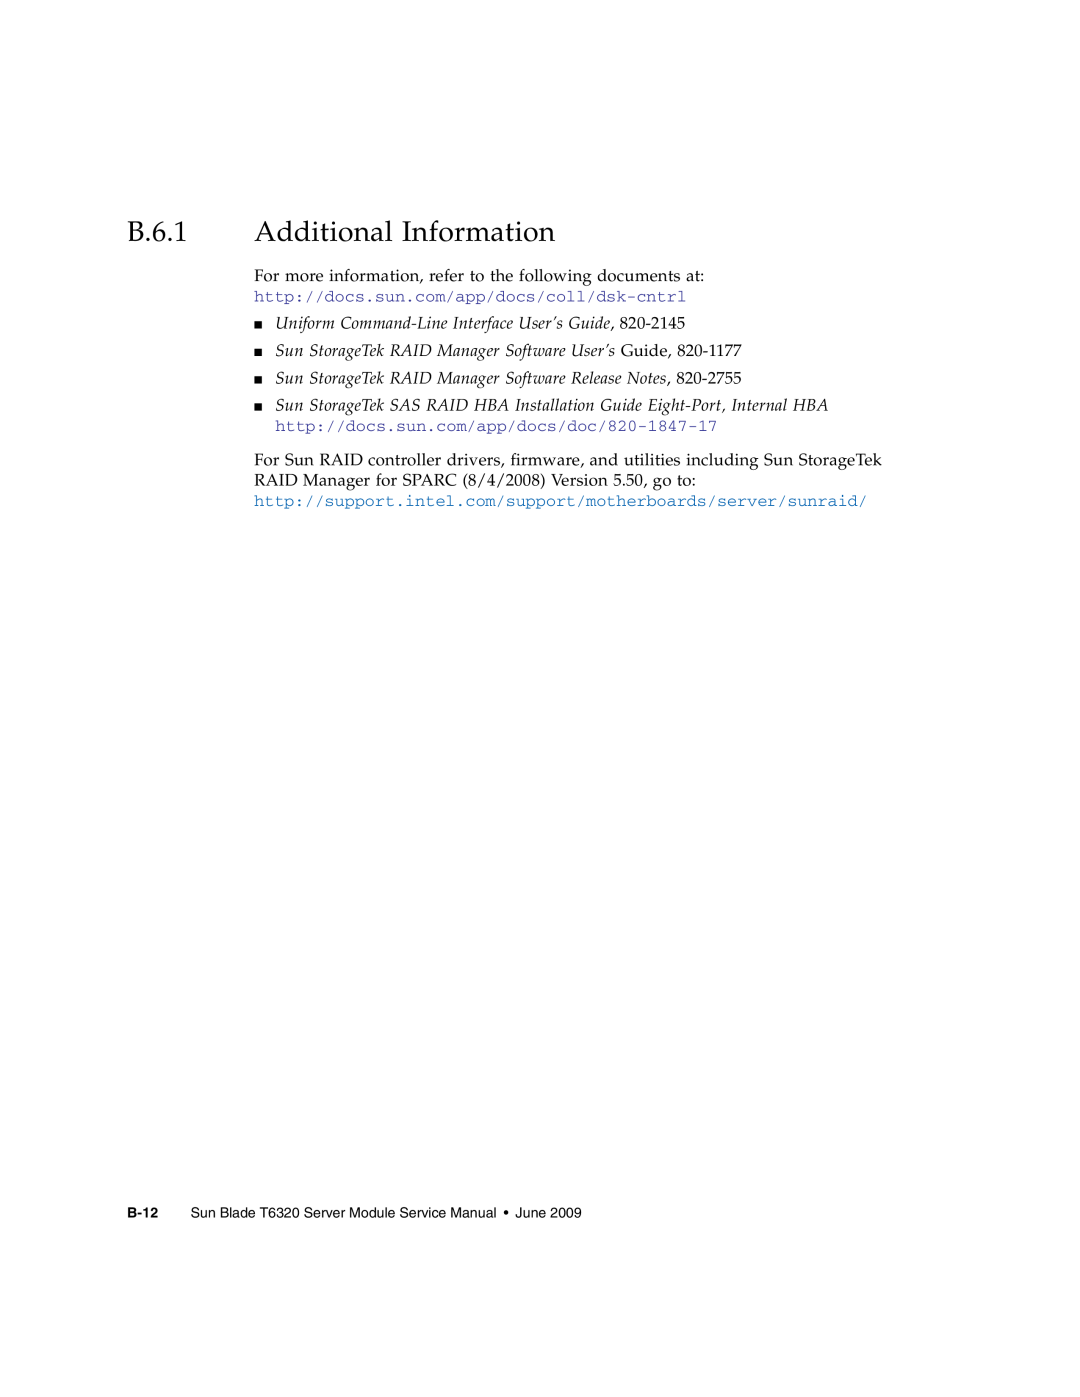 Sun Microsystems T6320 service manual B.6.1 Additional Information, http//docs.sun.com/app/docs/coll/dsk-cntrl 